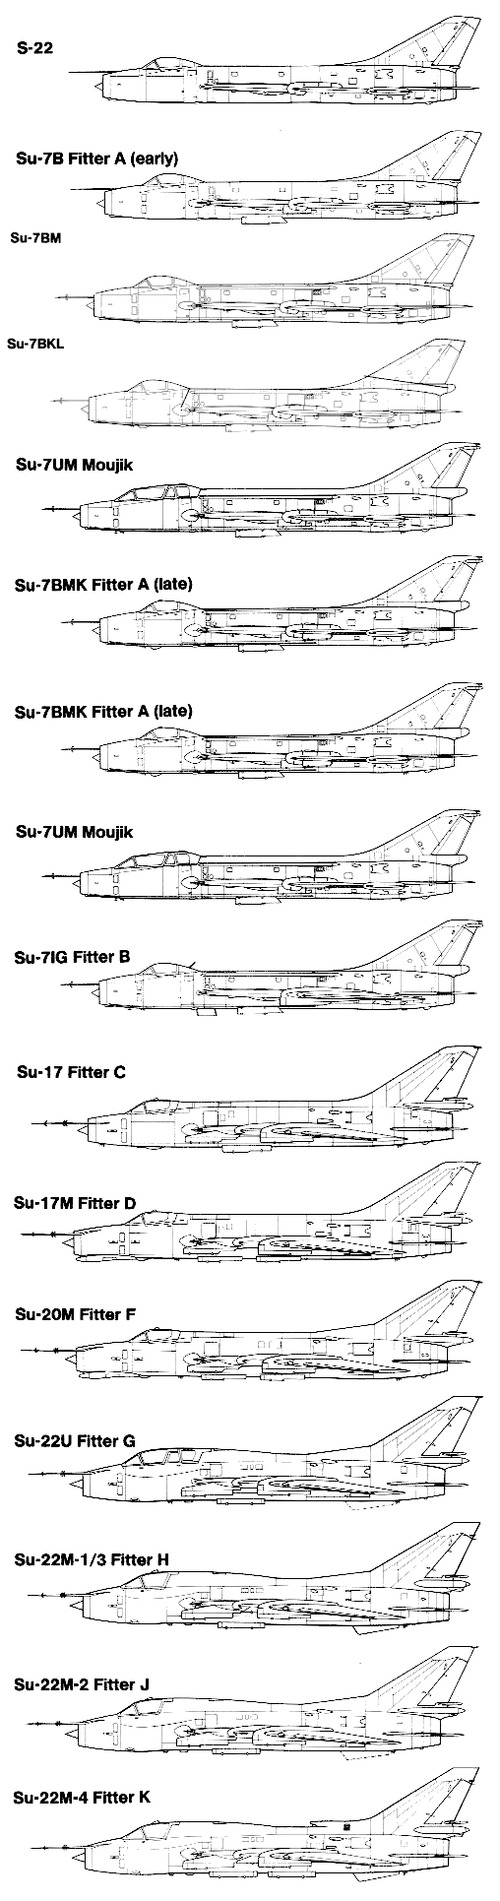 Sukhoi Su-7 Fitter